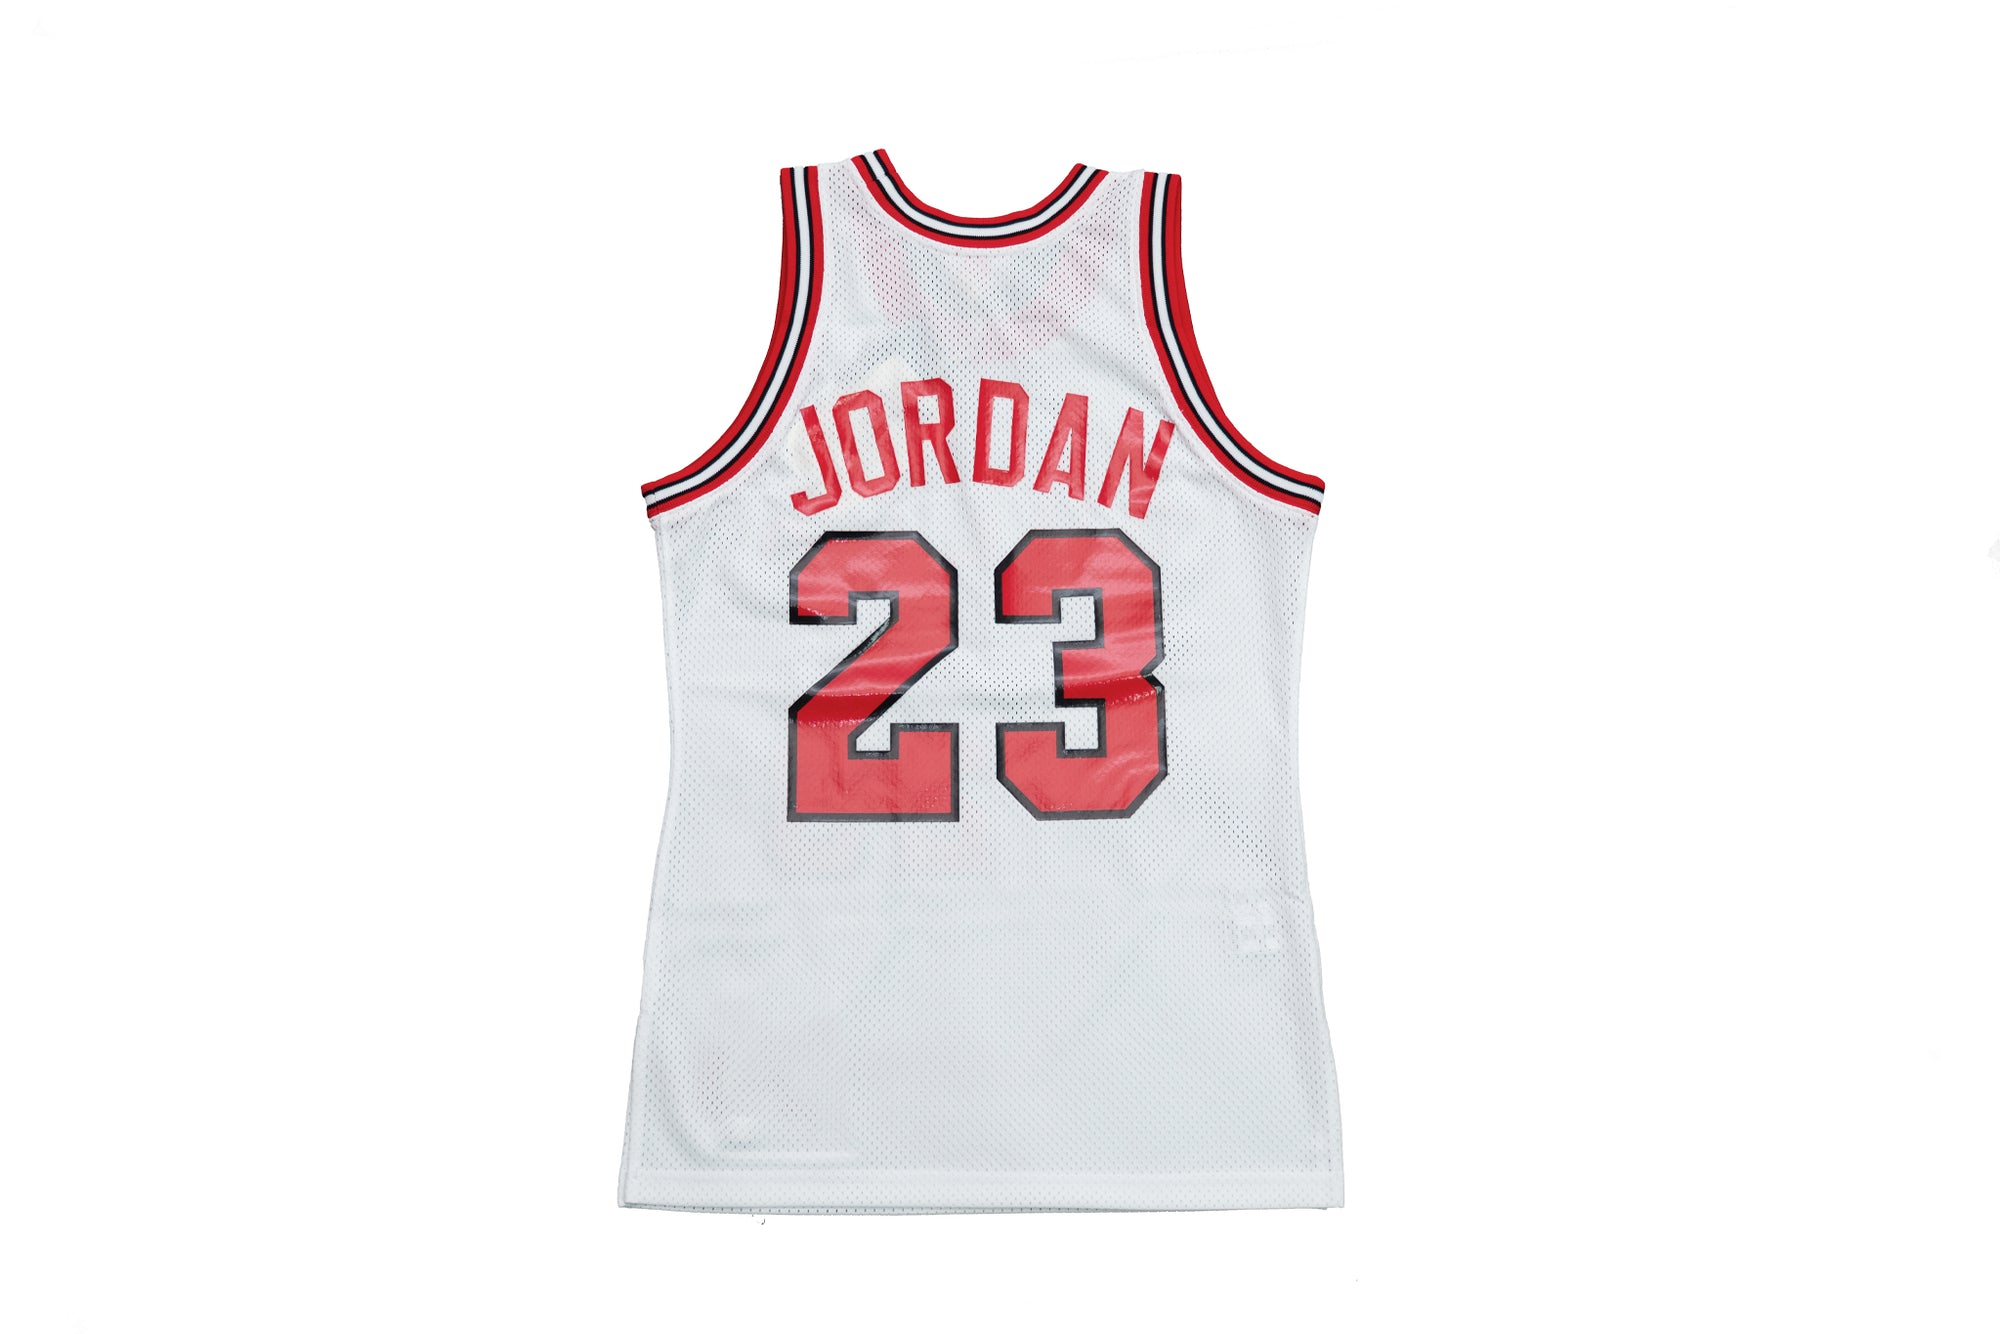 Youth Chicago Bulls Authentic Mitchell & Ness Michael Jordan 1984-85 Jersey